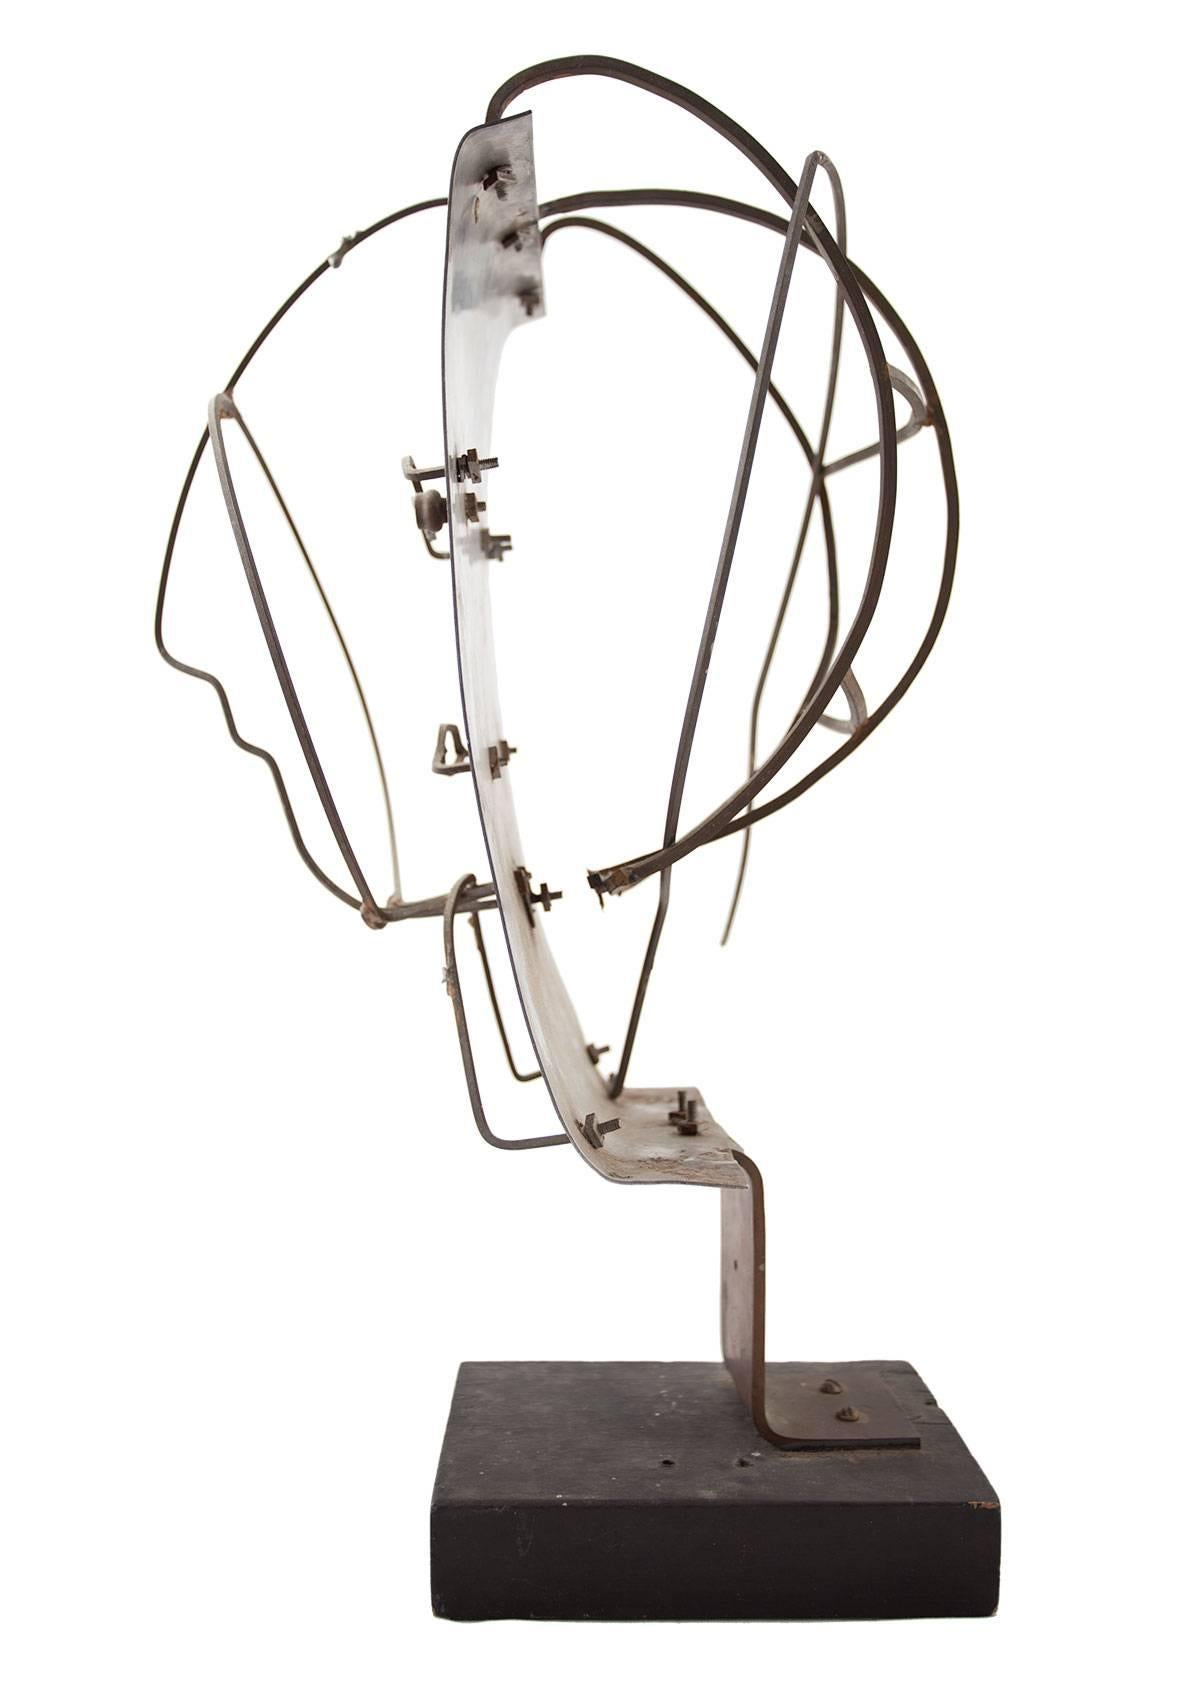 Abstract Sculpture Irving George Lehman - Sculpture moderniste - Portrait figuratif - Buste -Œuvre brutaliste en fil de fer